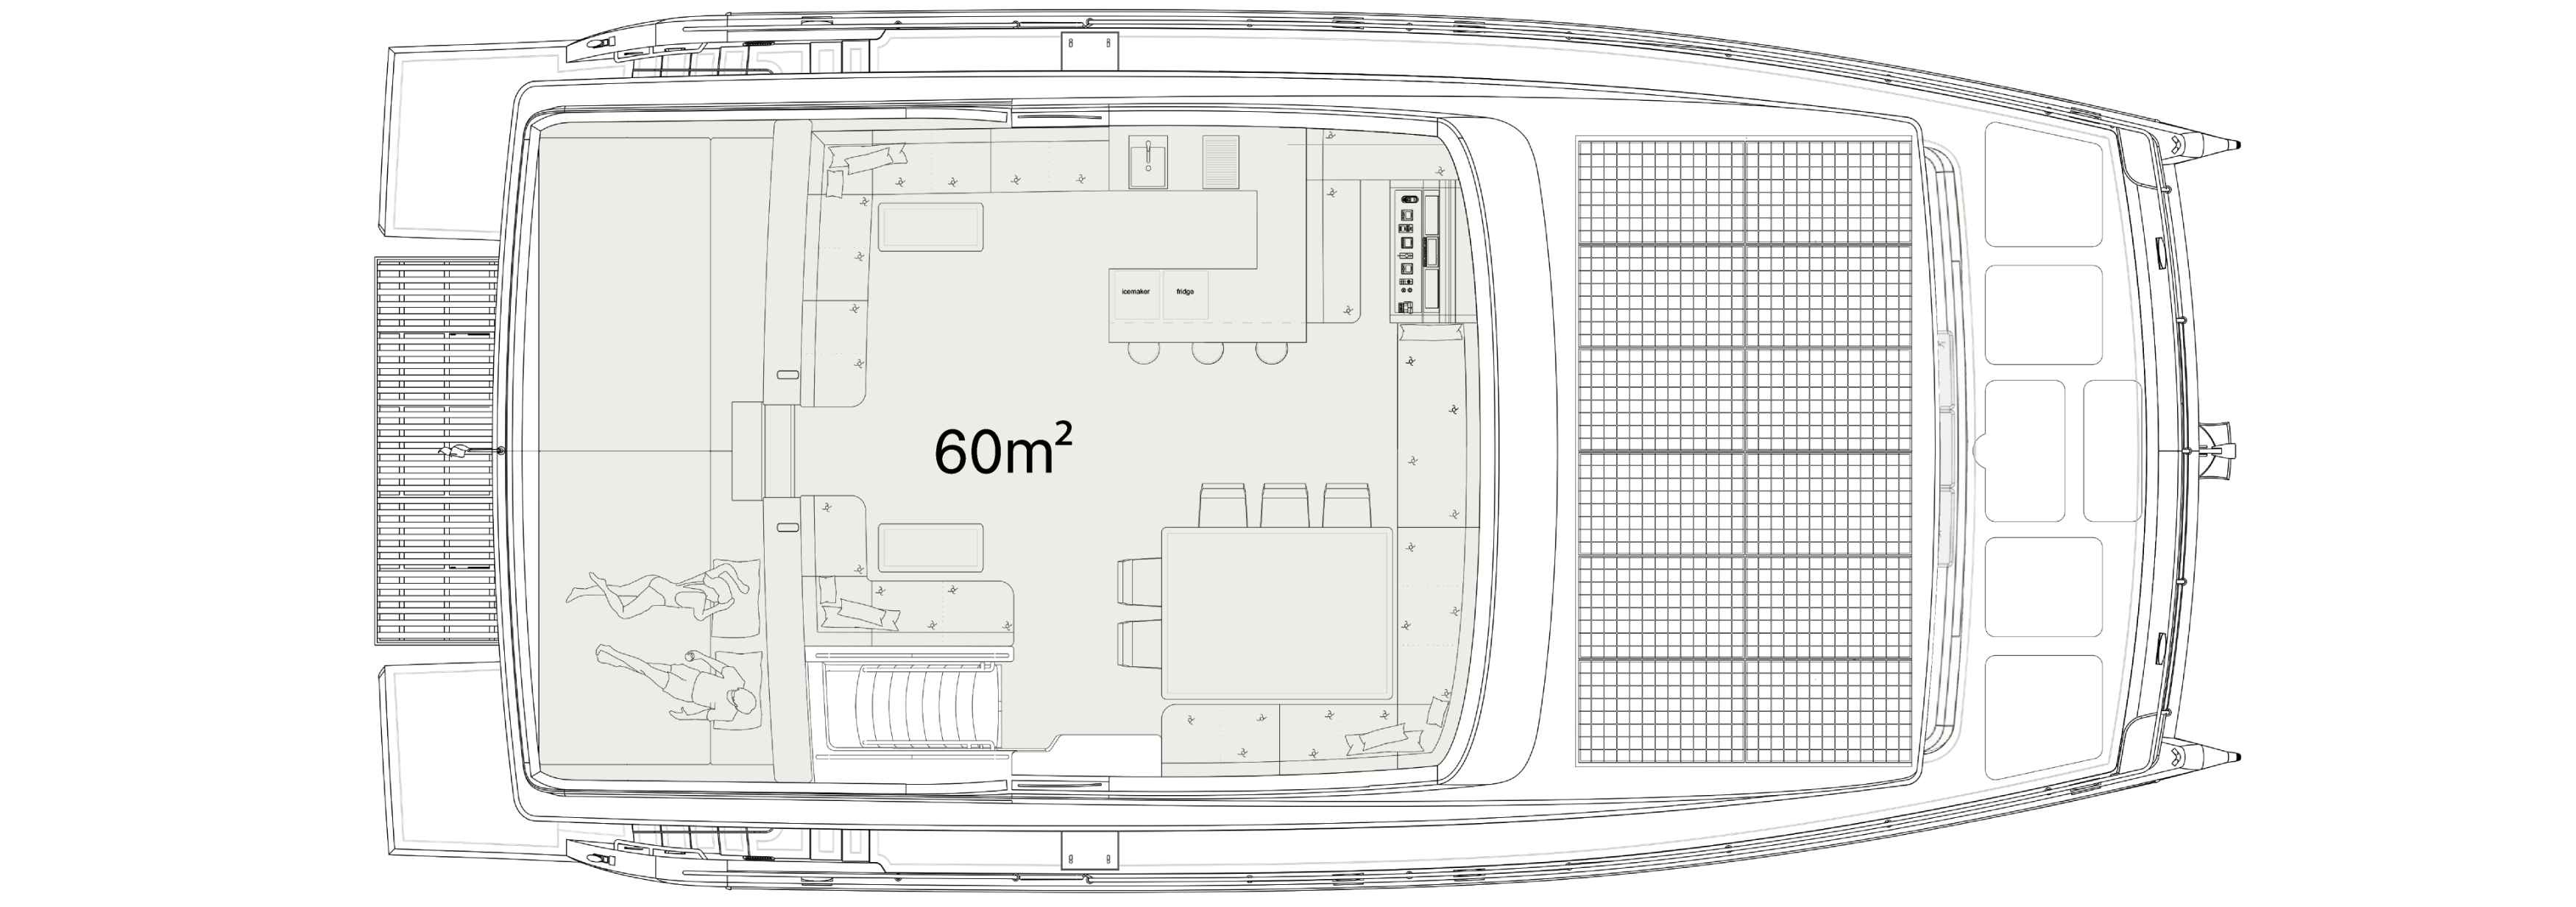 Yacht 3 deck area plan